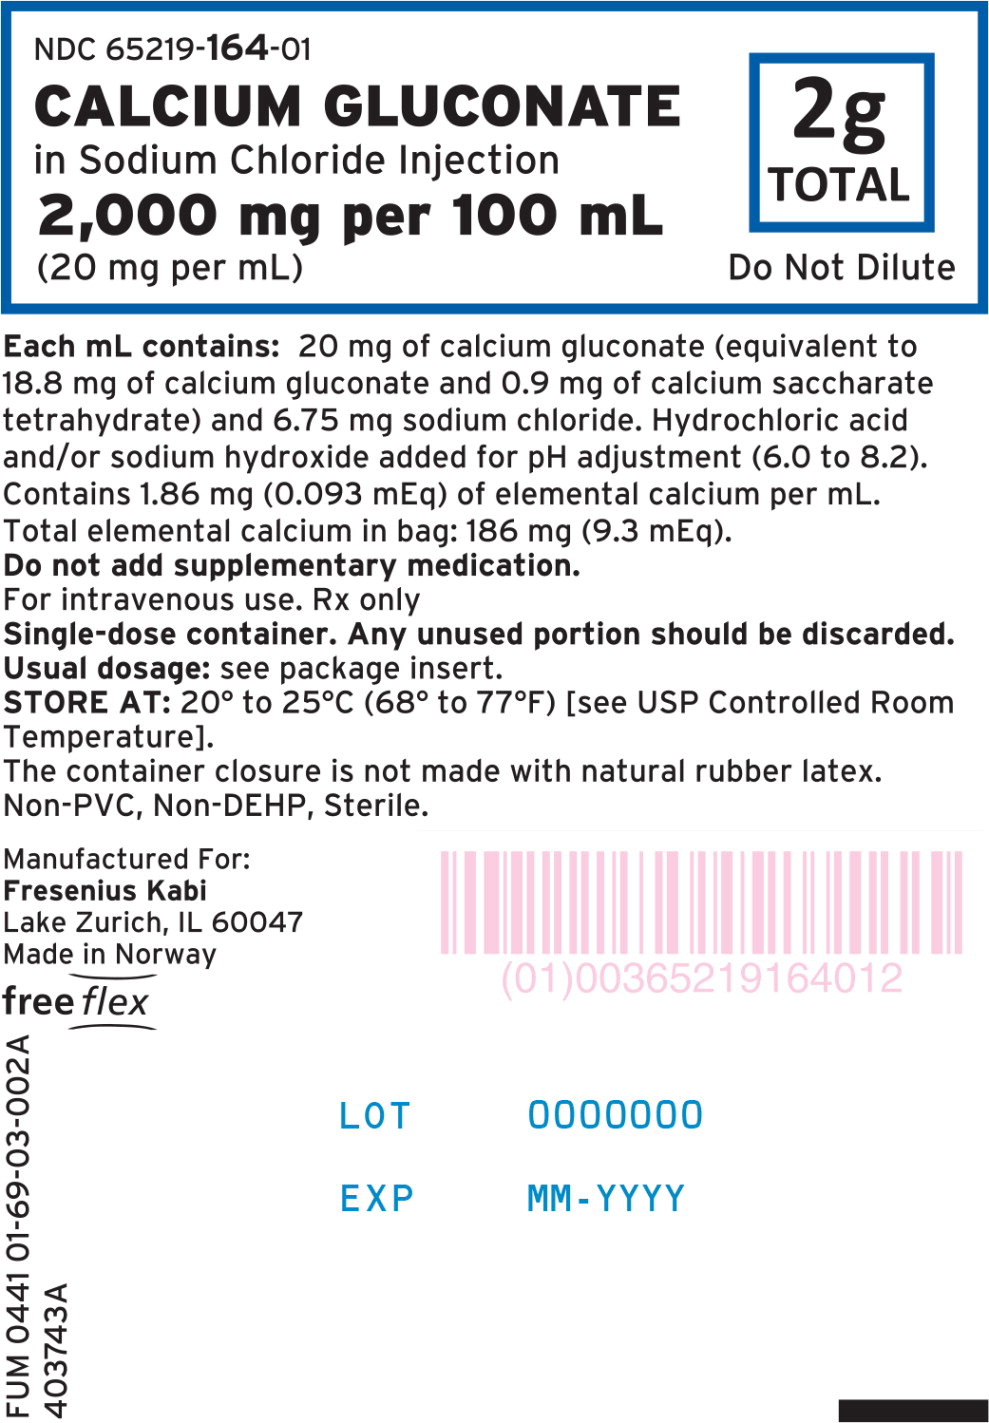 PACKAGE LABEL - PRINCIPAL DISPLAY – Calcium Gluconate 2 g Bag Label
